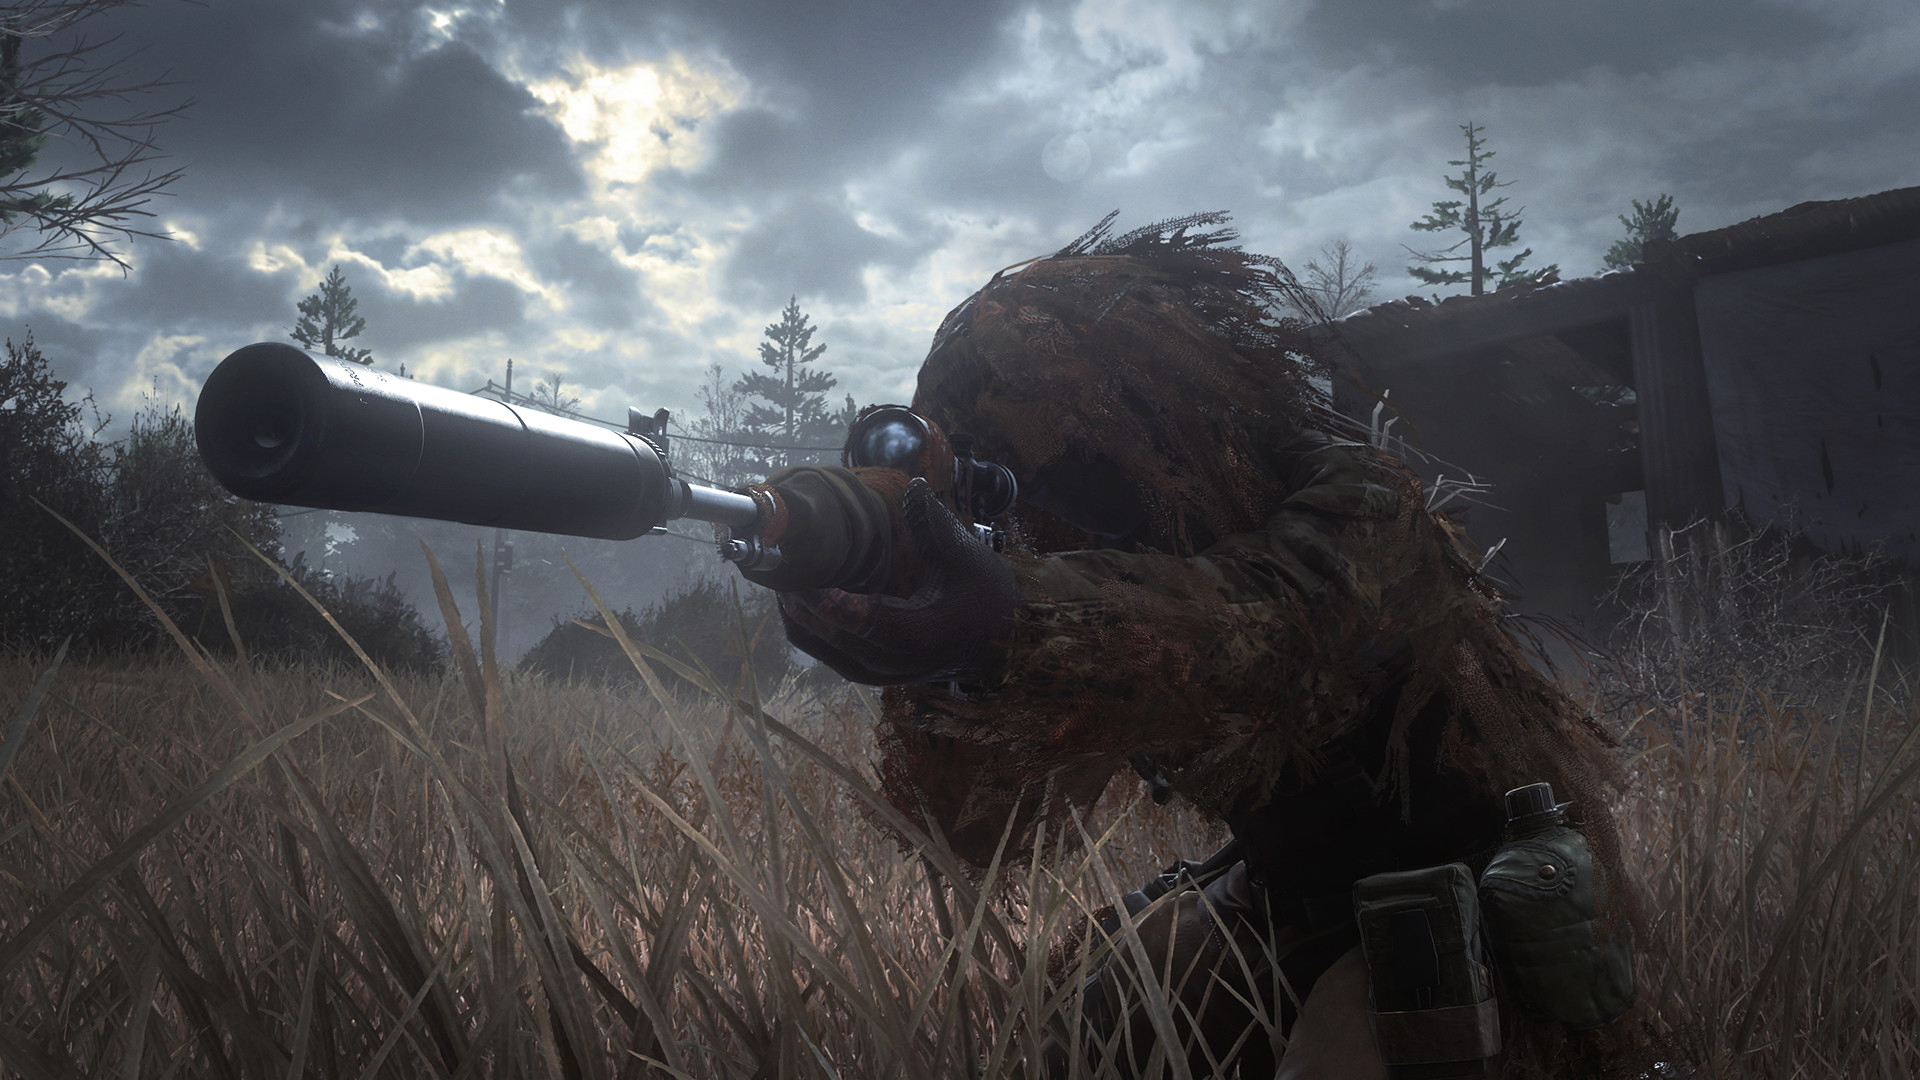 Jogo Sniper Ghost Warrior Contracts 2 PS4 no Paraguai - Atacado Games -  Paraguay